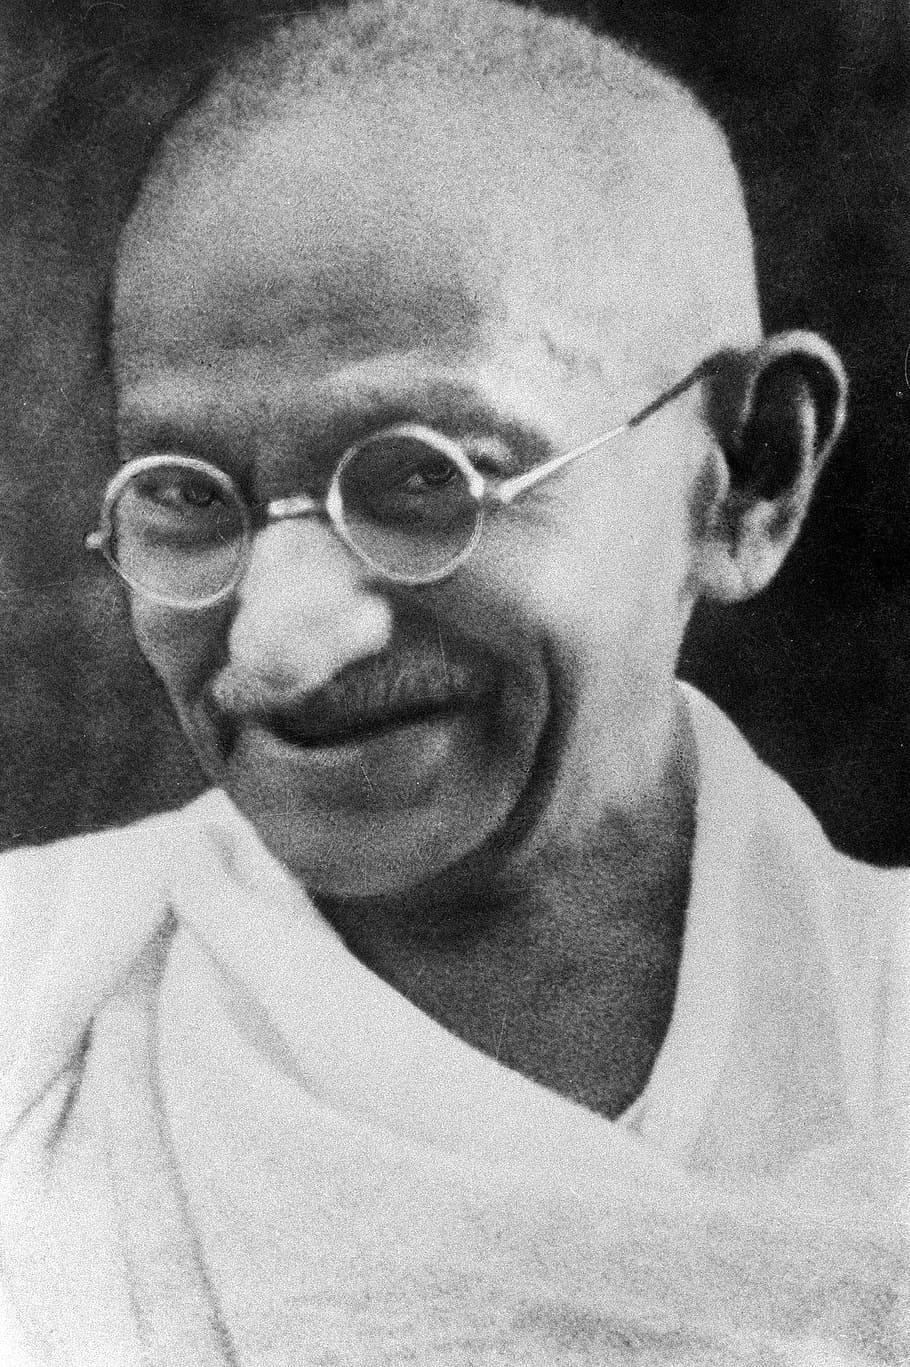 HD wallpaper: Mahatma Gandhi, pacifist, mohandas karamchand